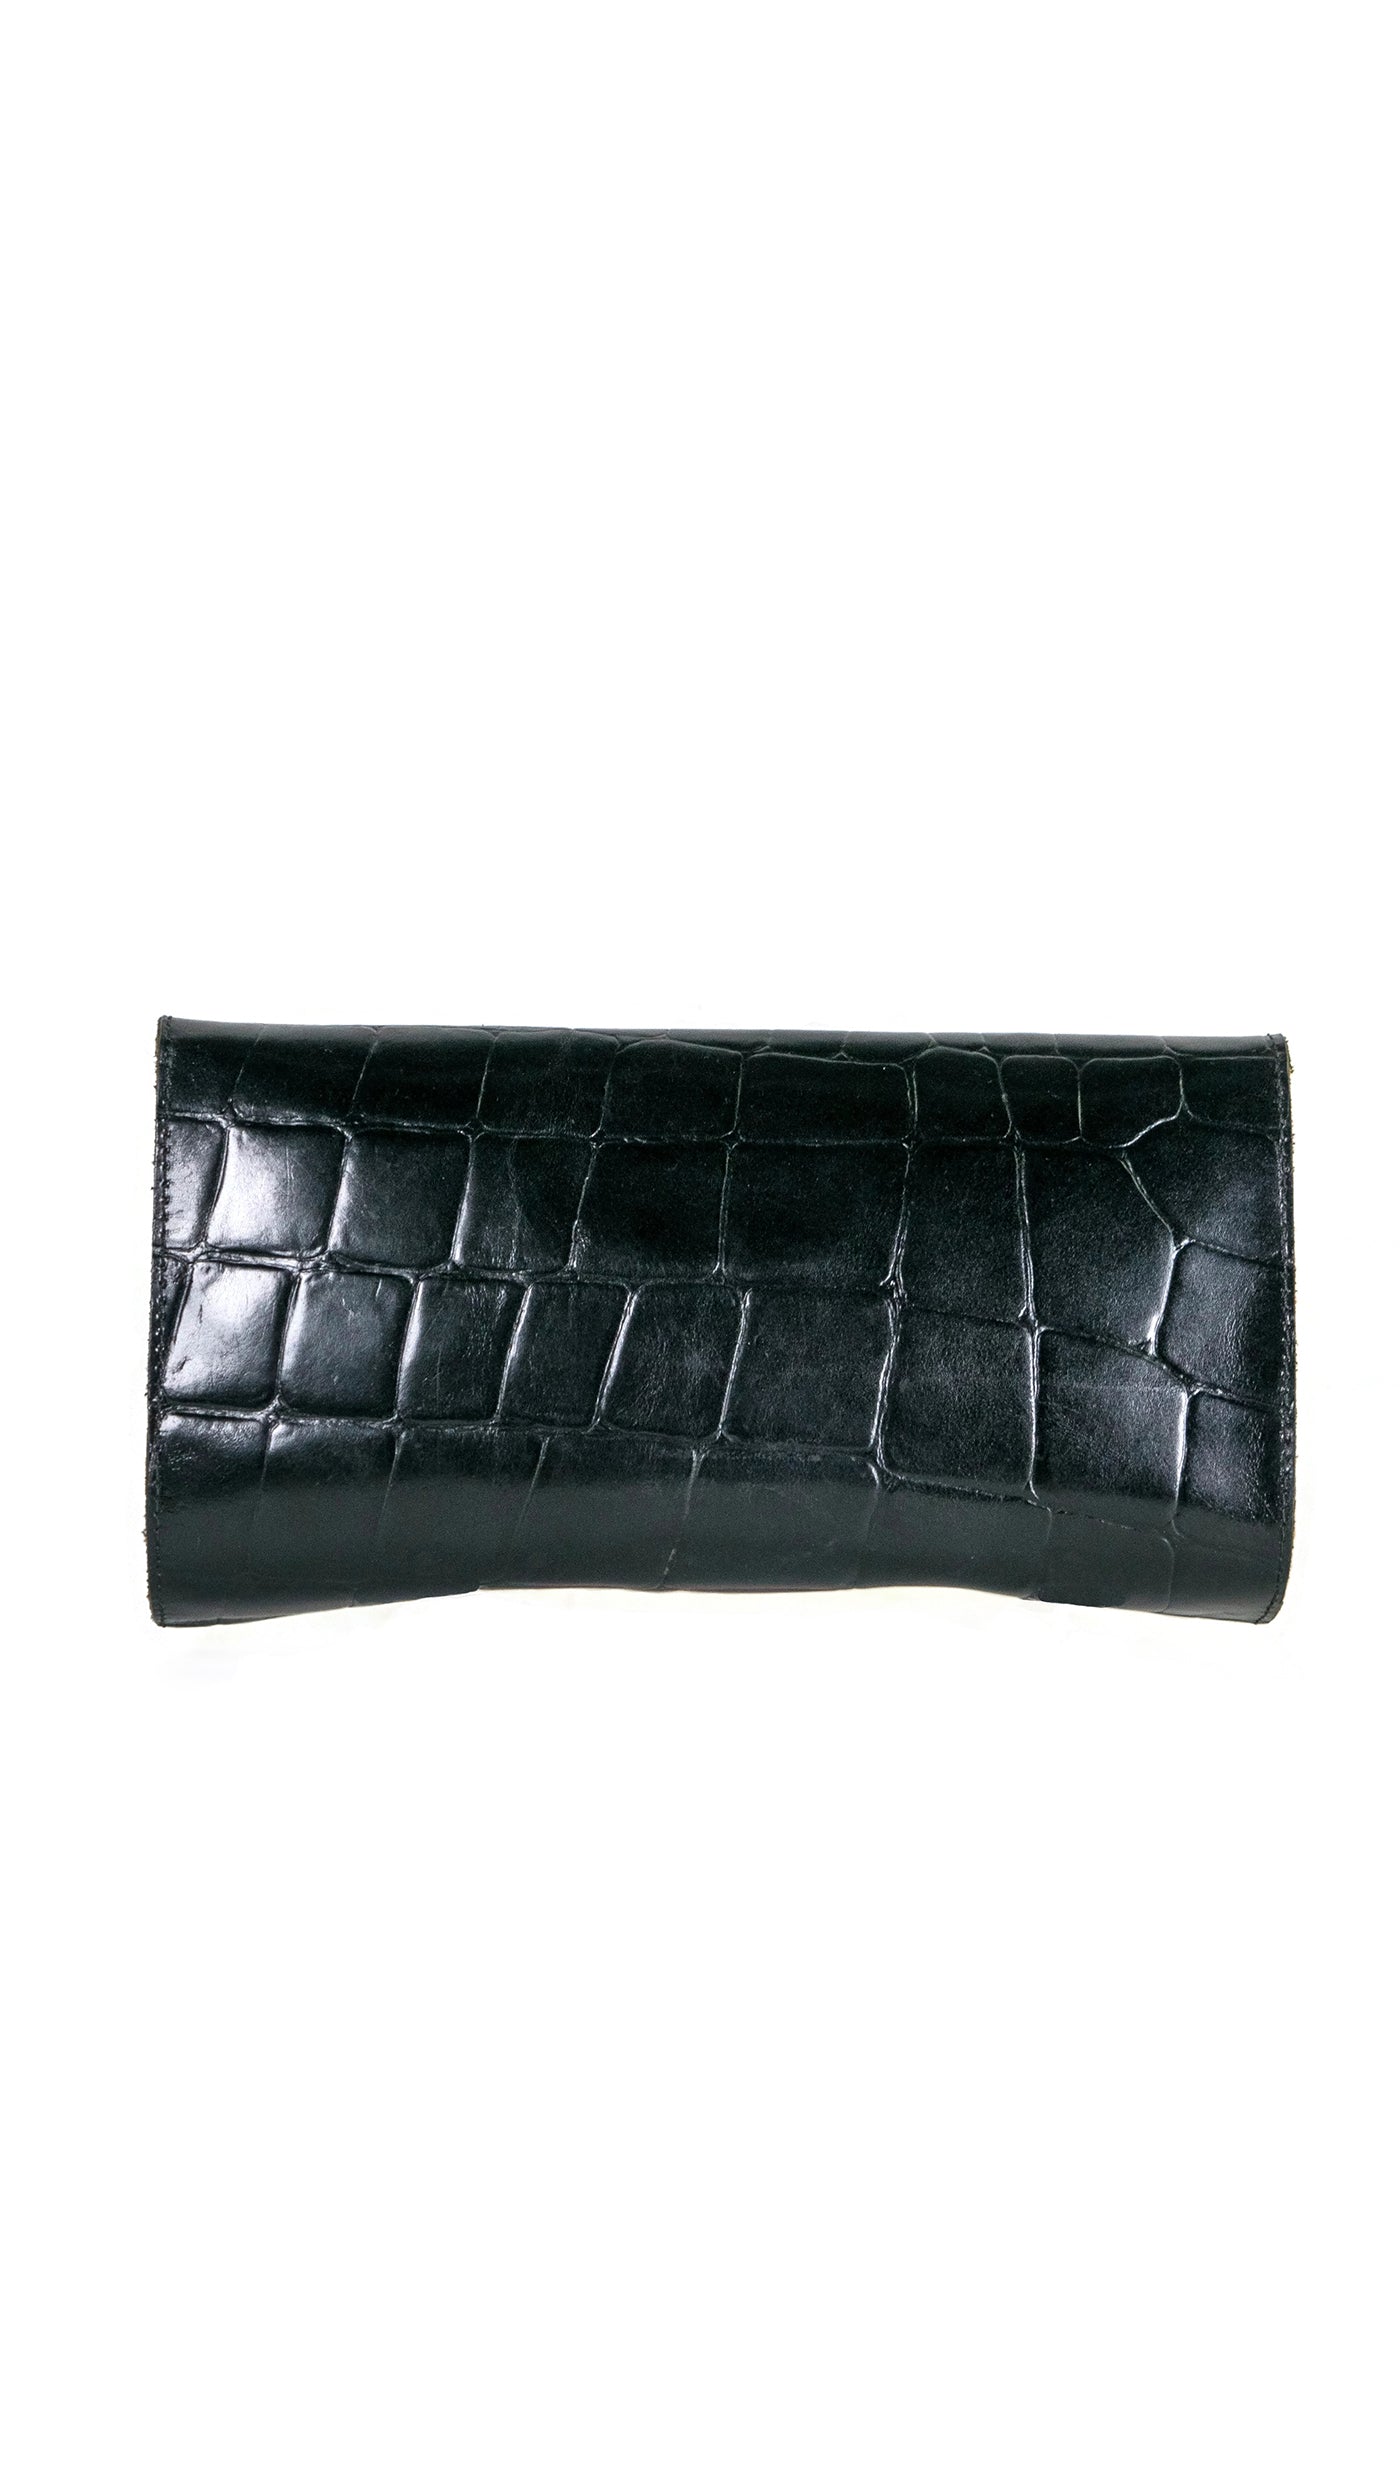 Cheri Black Leather Clutch